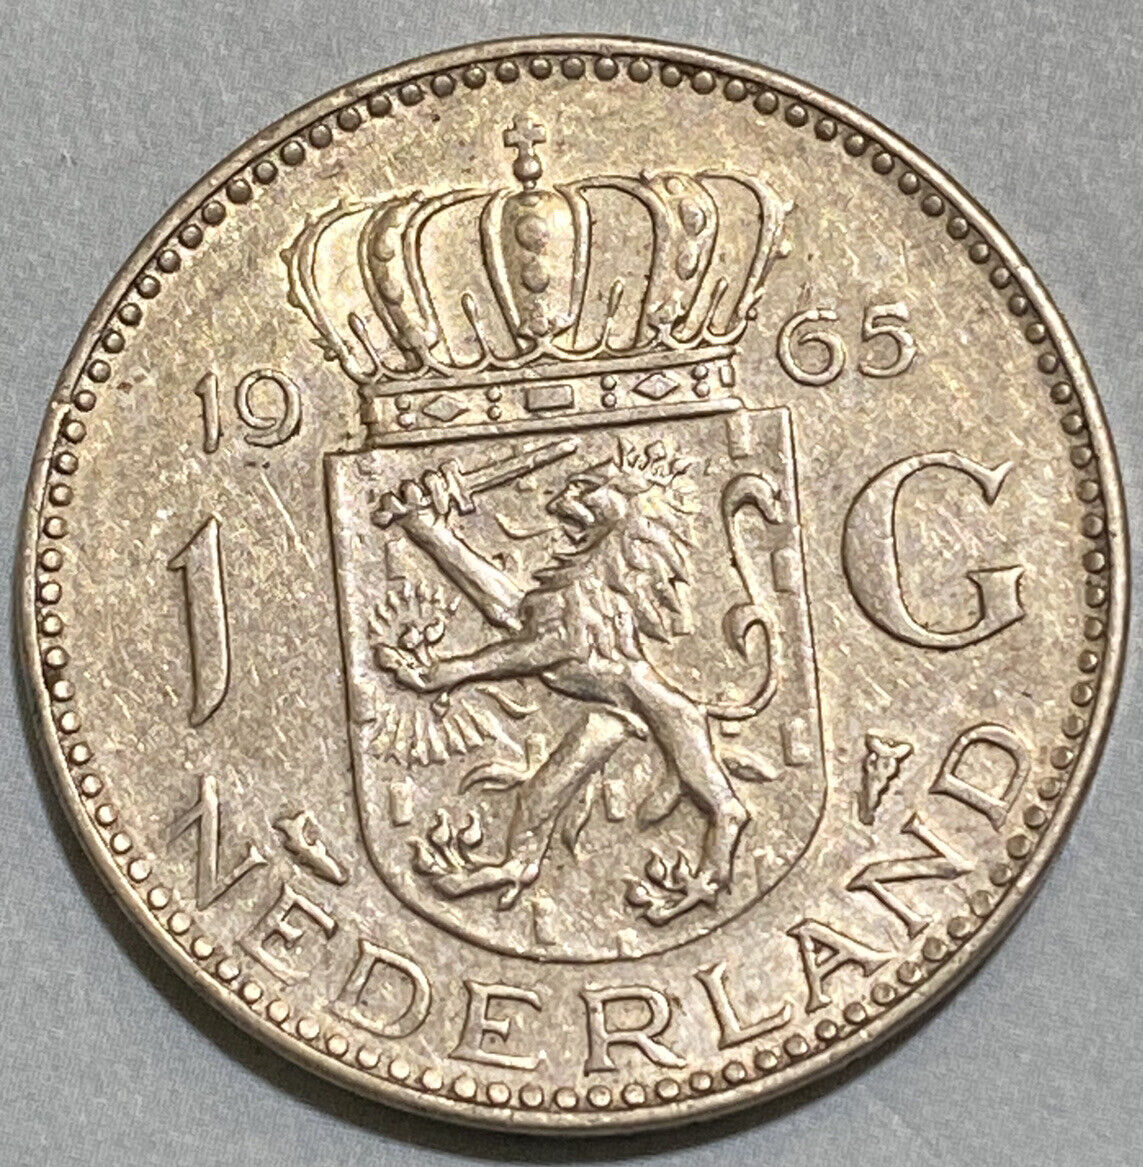 1965 Netherlands Silver Coin Silver One Gulden KM 184 .720 Silver